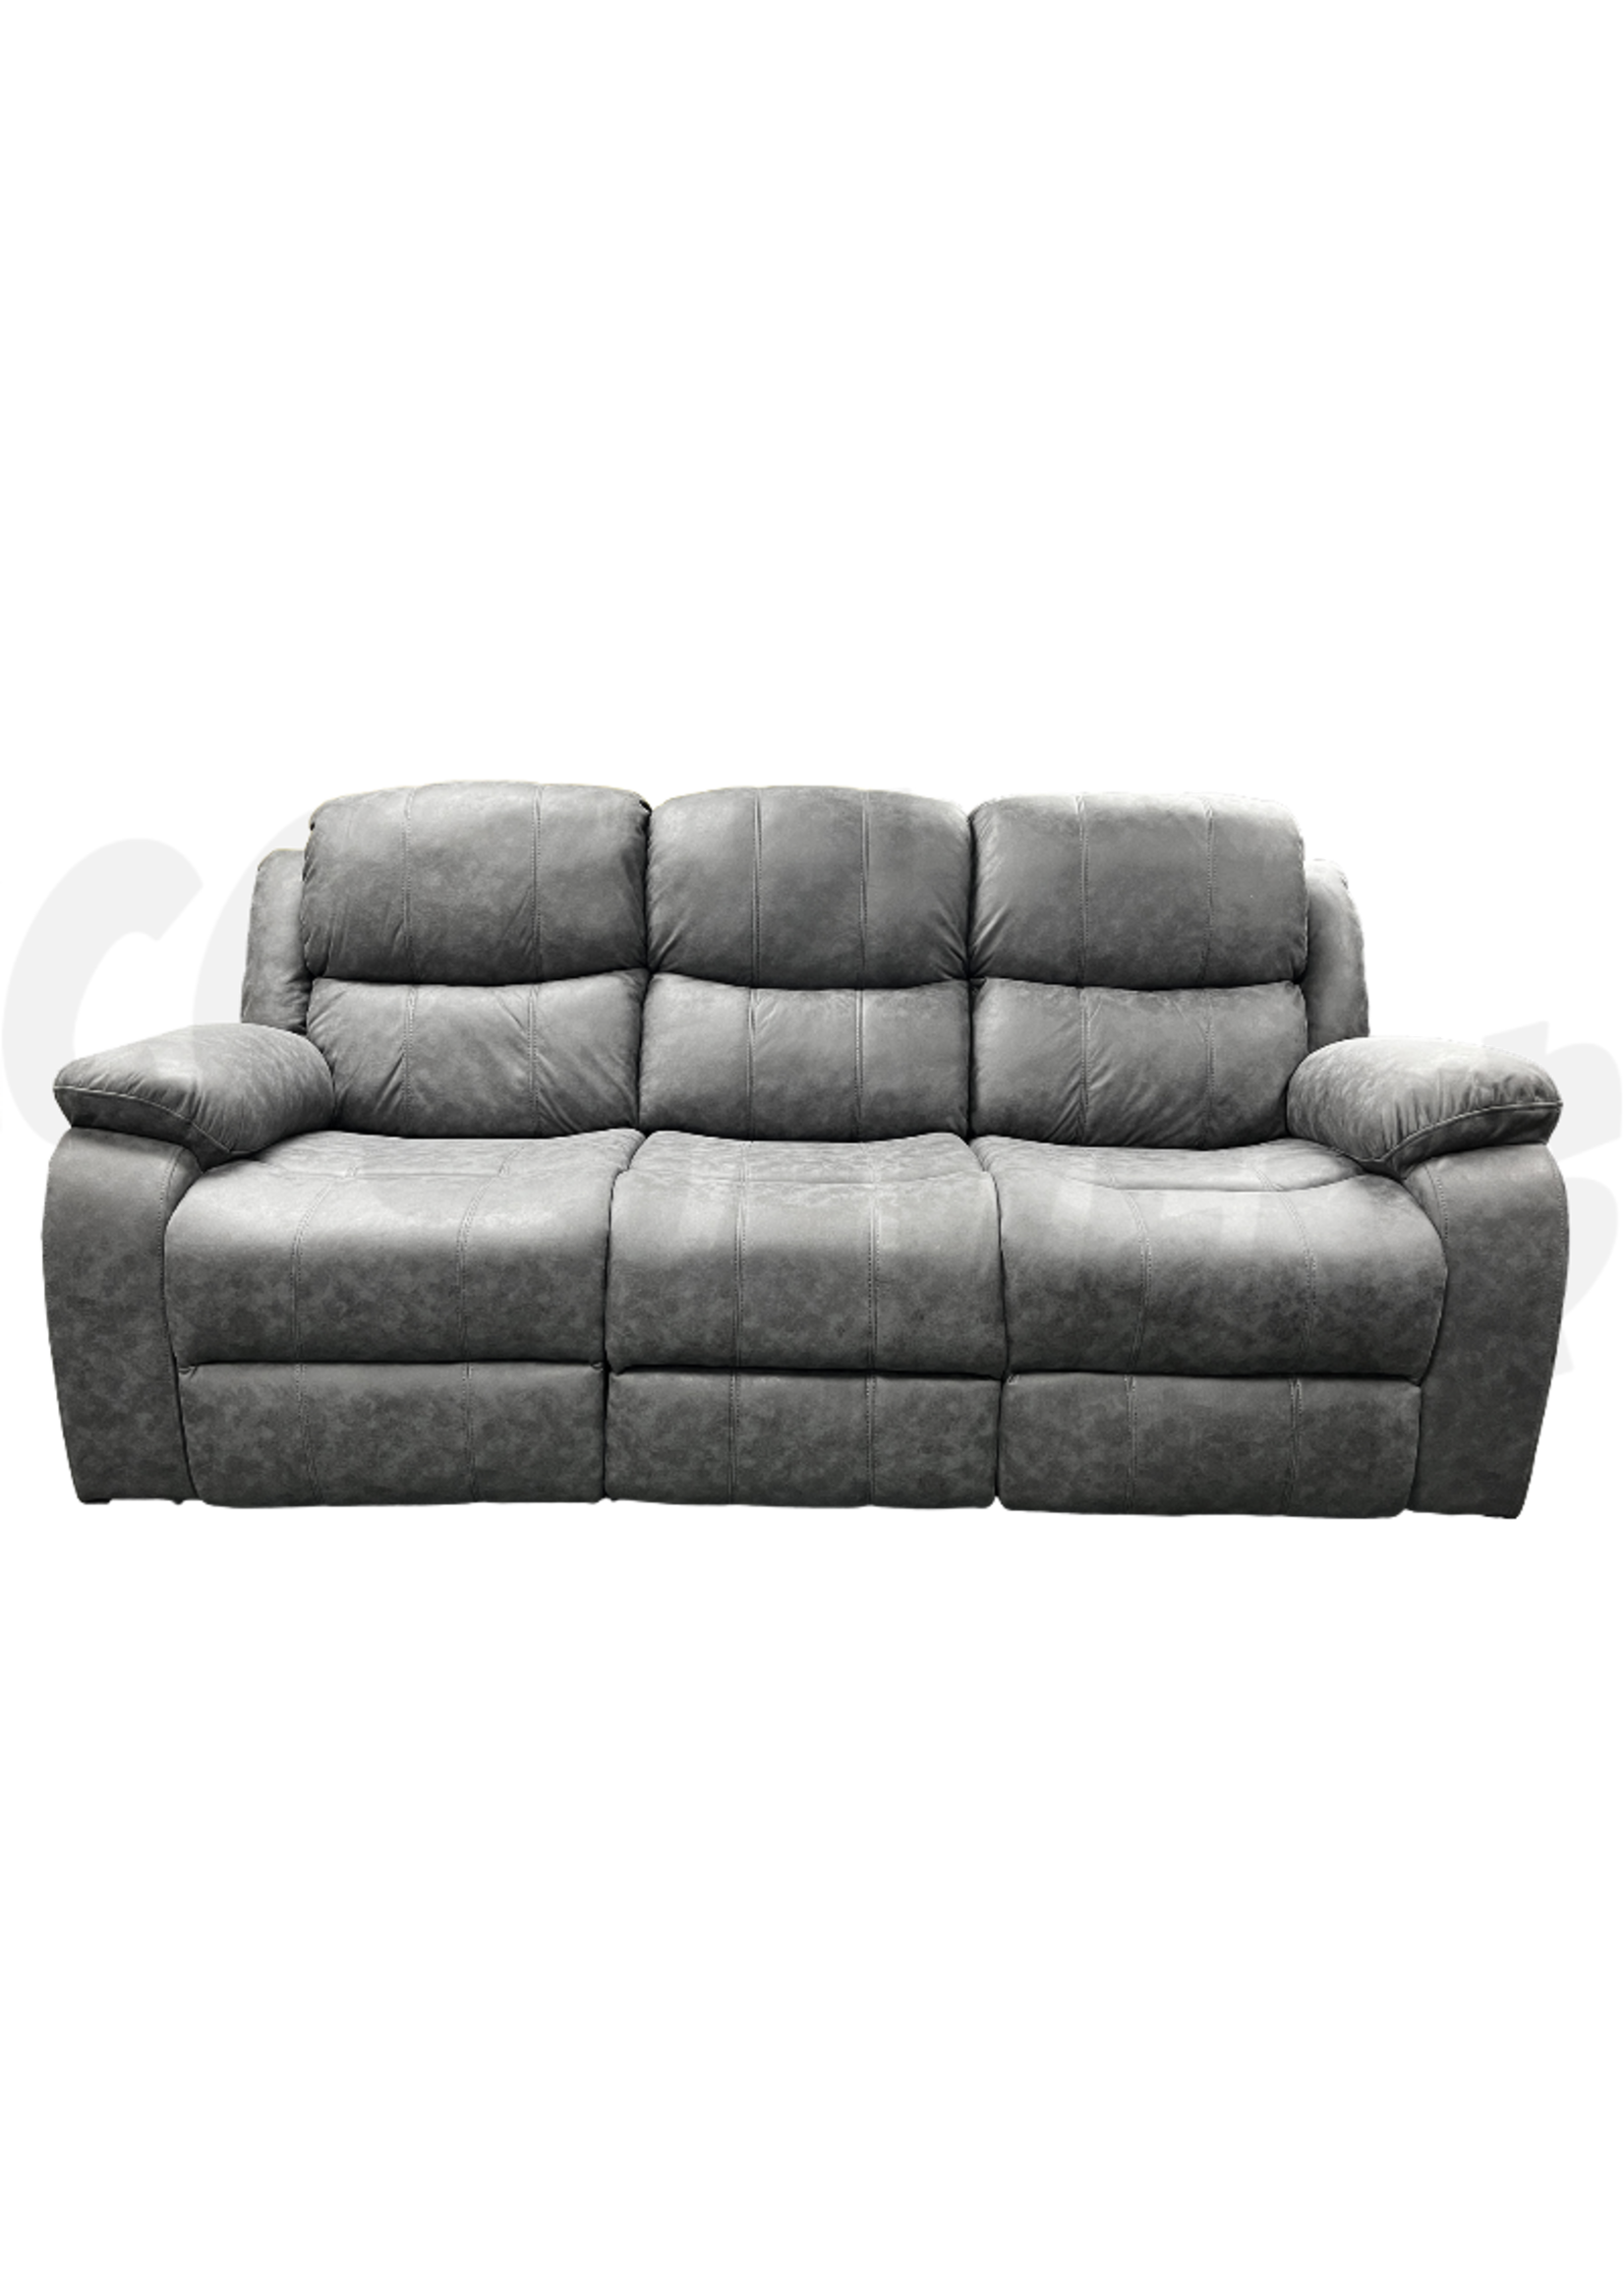 Aspen Collection Daytona 3pc Reclining Sofa Set